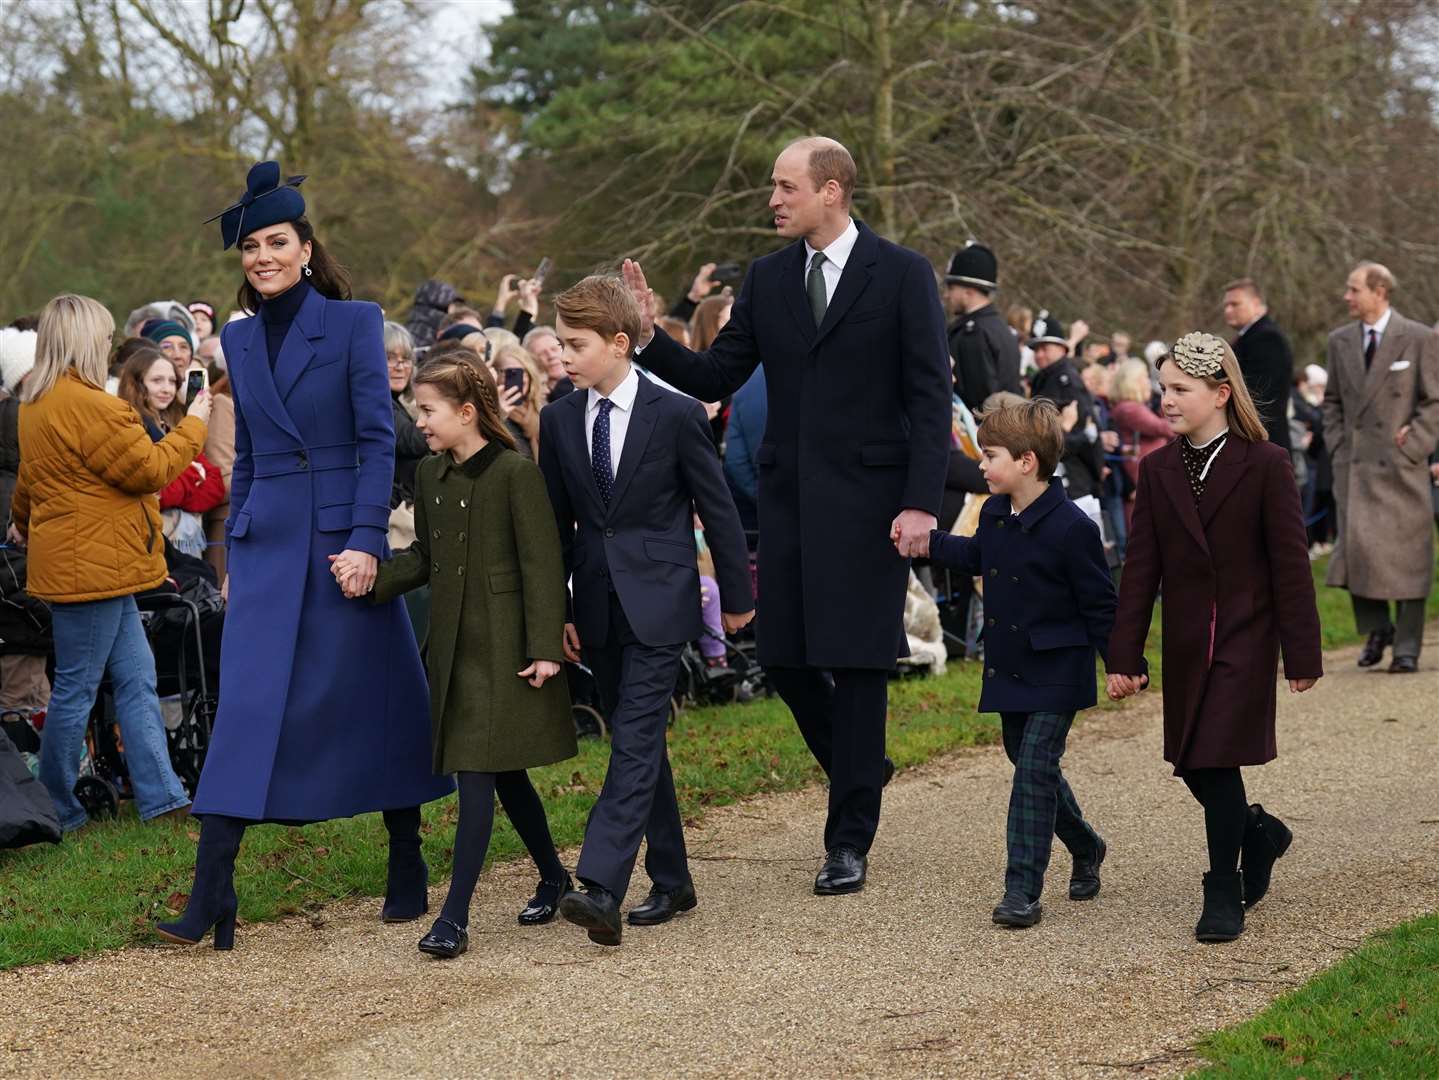 The Princess of Wales, Princess Charlotte, Prince George, the Prince of Wales, Prince Louis and Mia Tindall strolled to the service, too (Joe Giddens/PA)